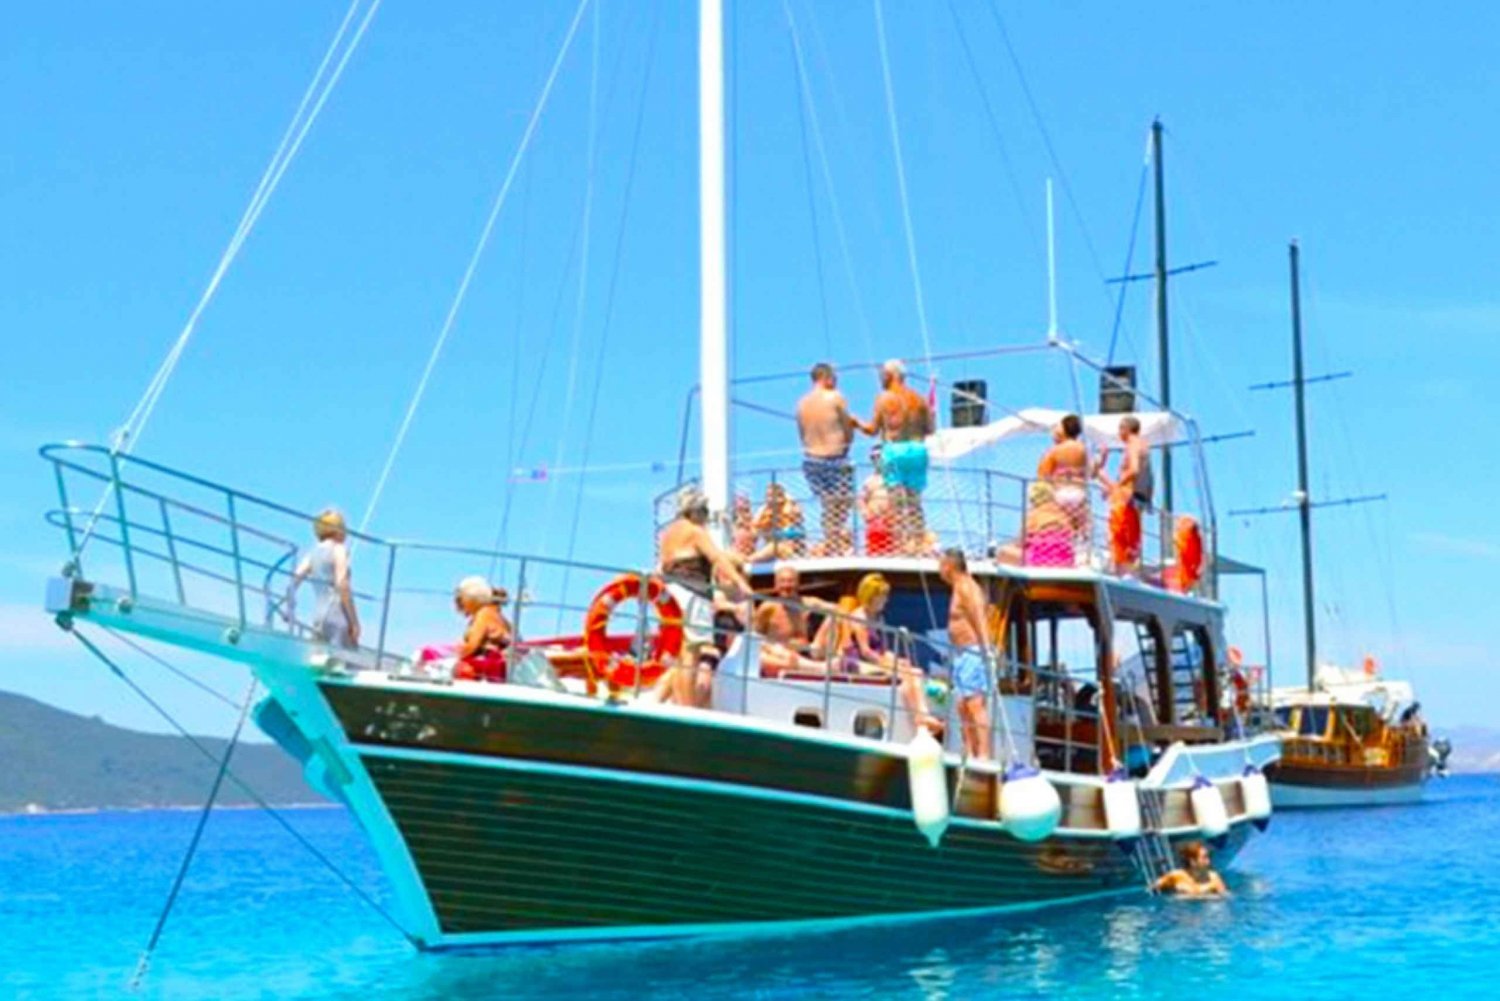 Bodrum Cleopatra & Orak Island Mix Tour by Boat